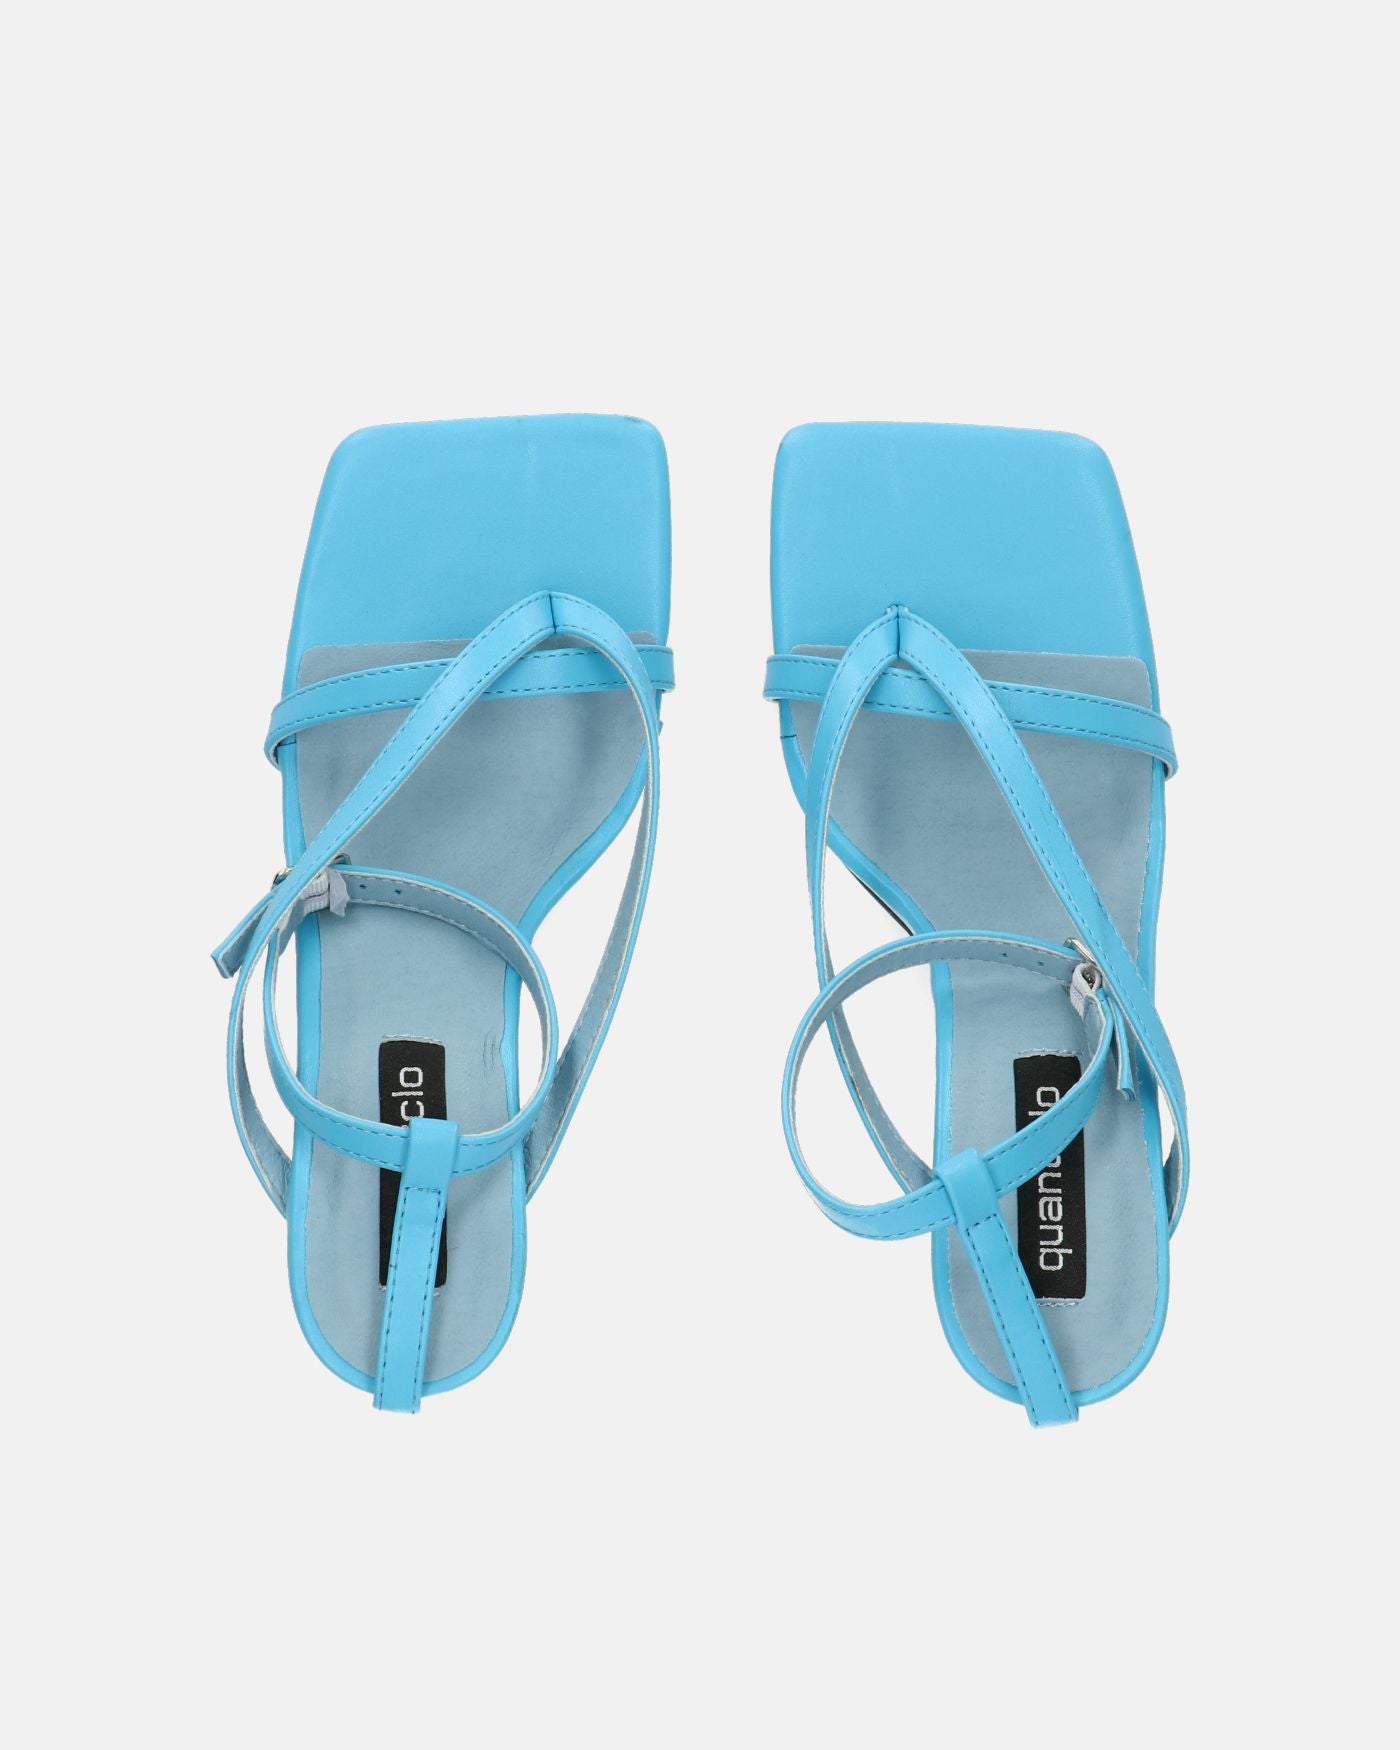 ADELE - thong sandal with blue heel